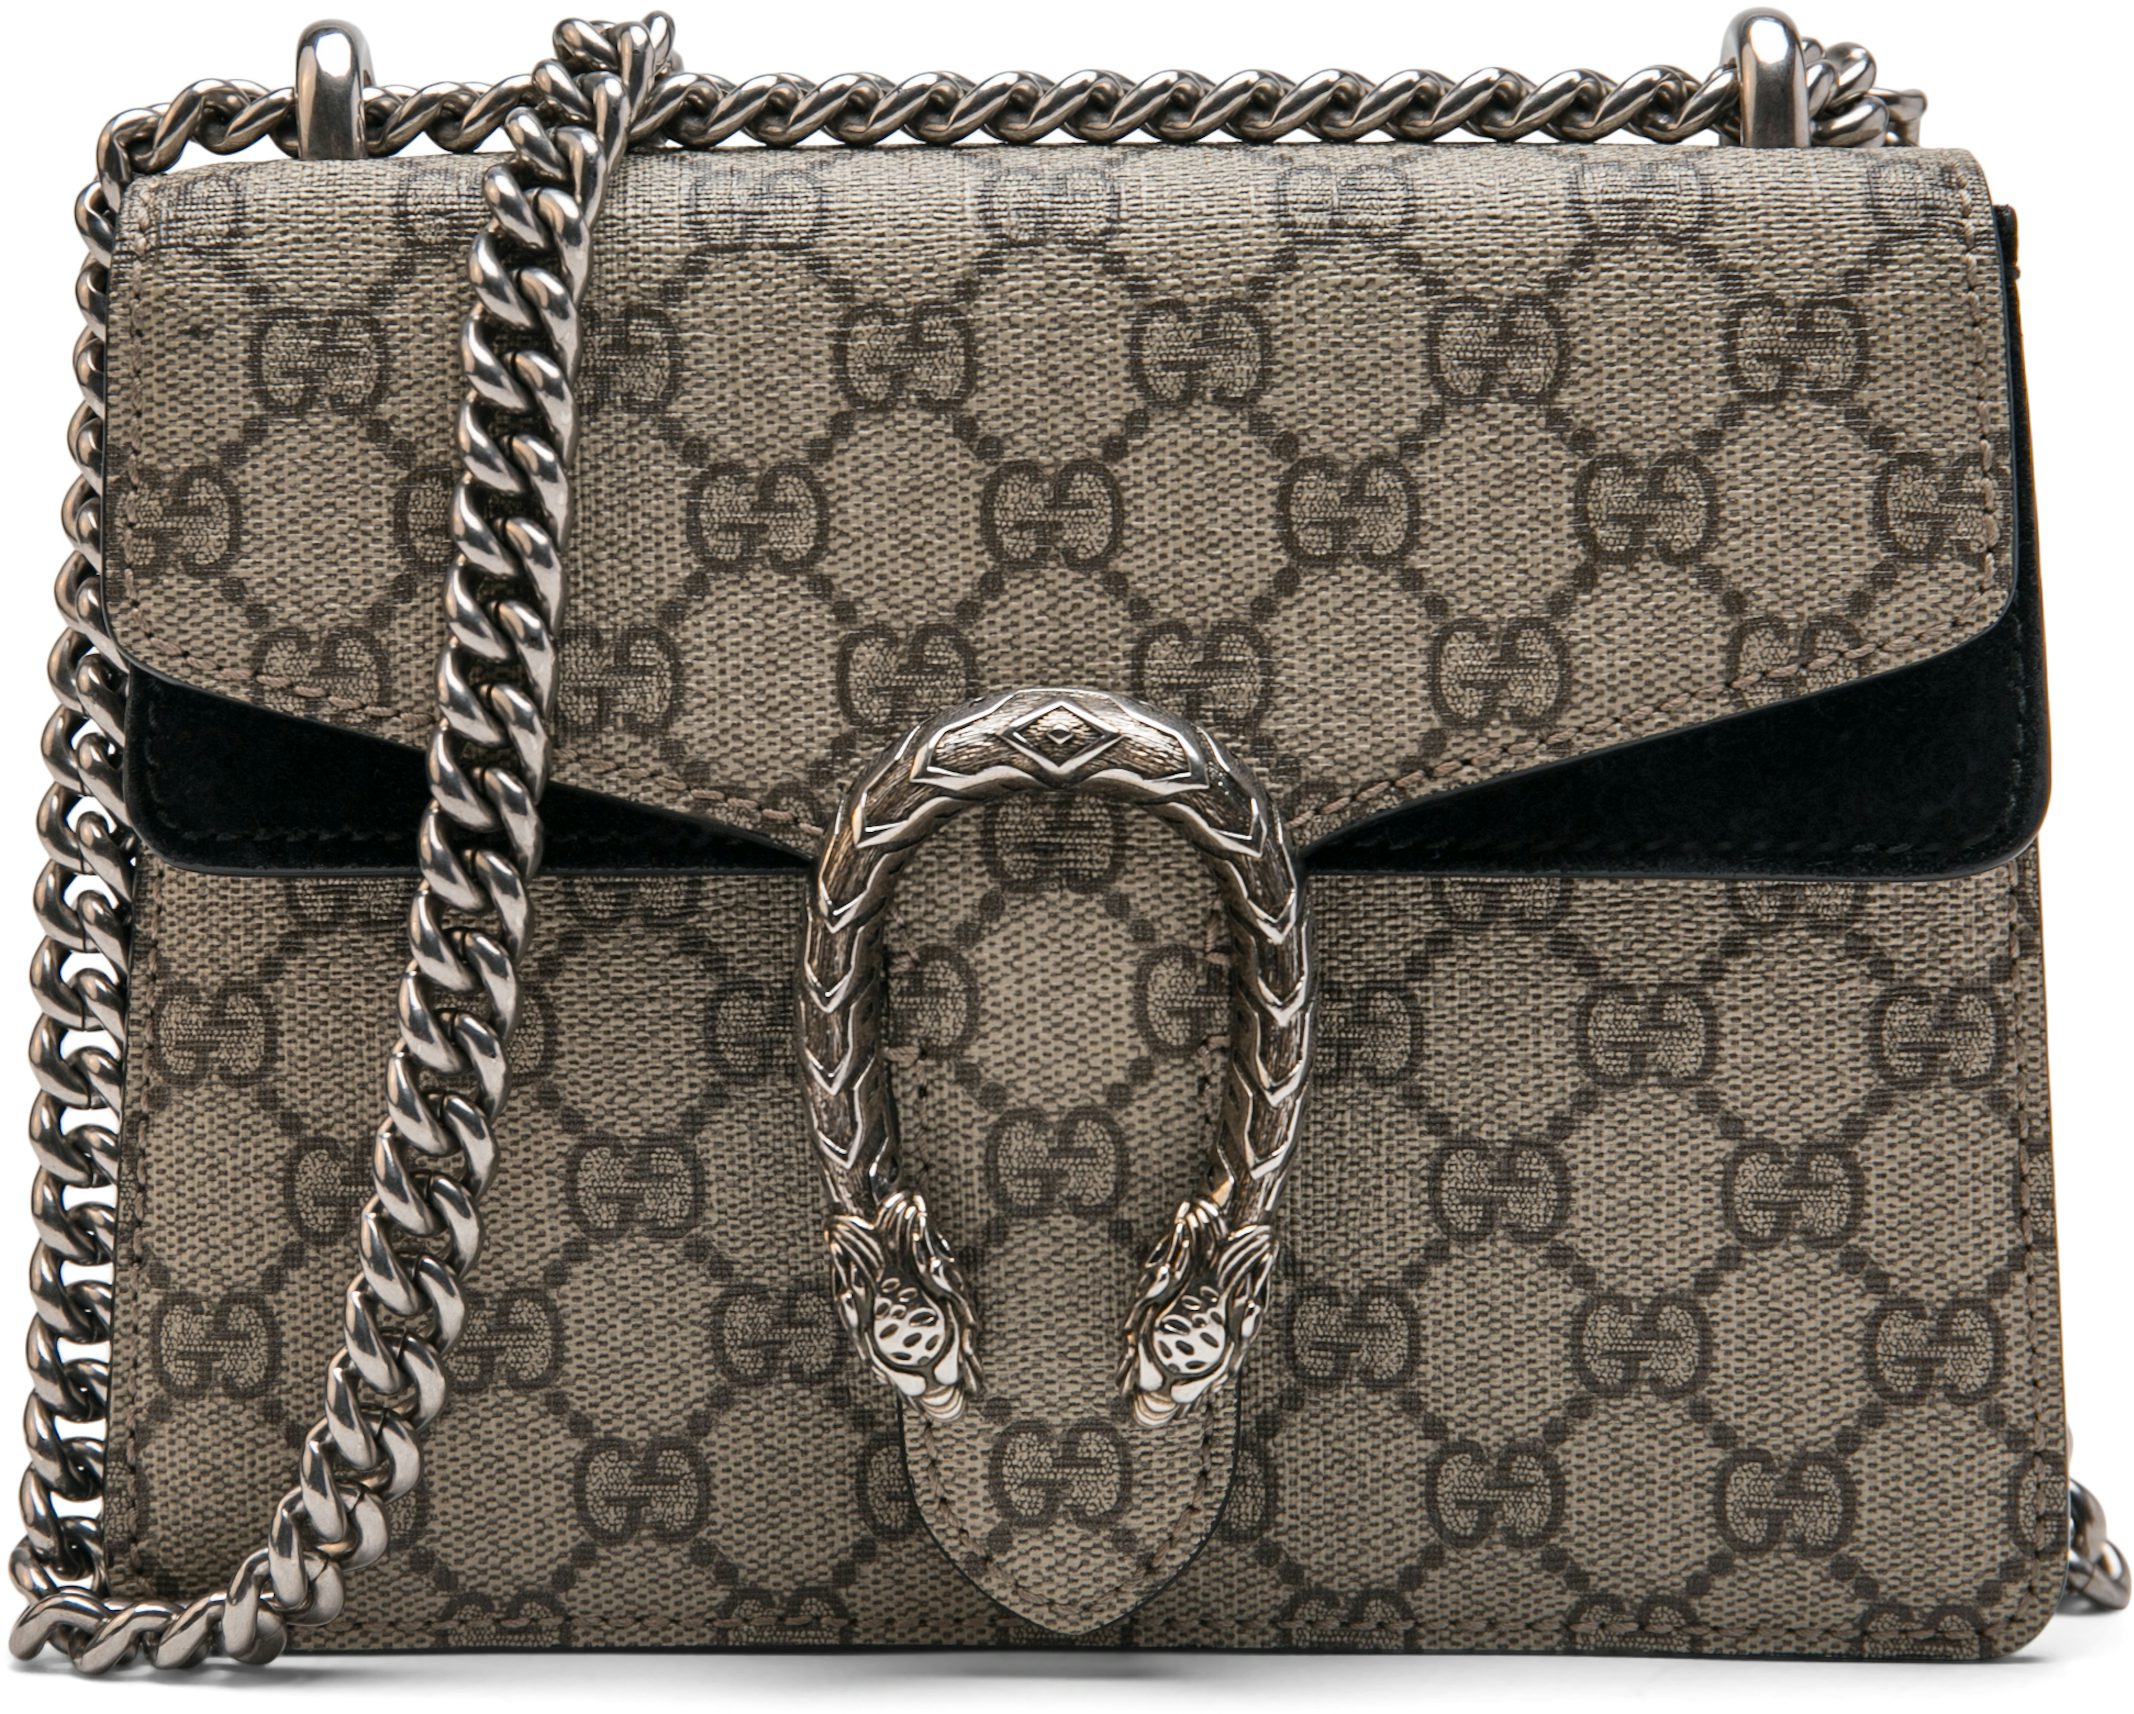 Gucci Dionysus Medium Suede Shoulder Bag in Black